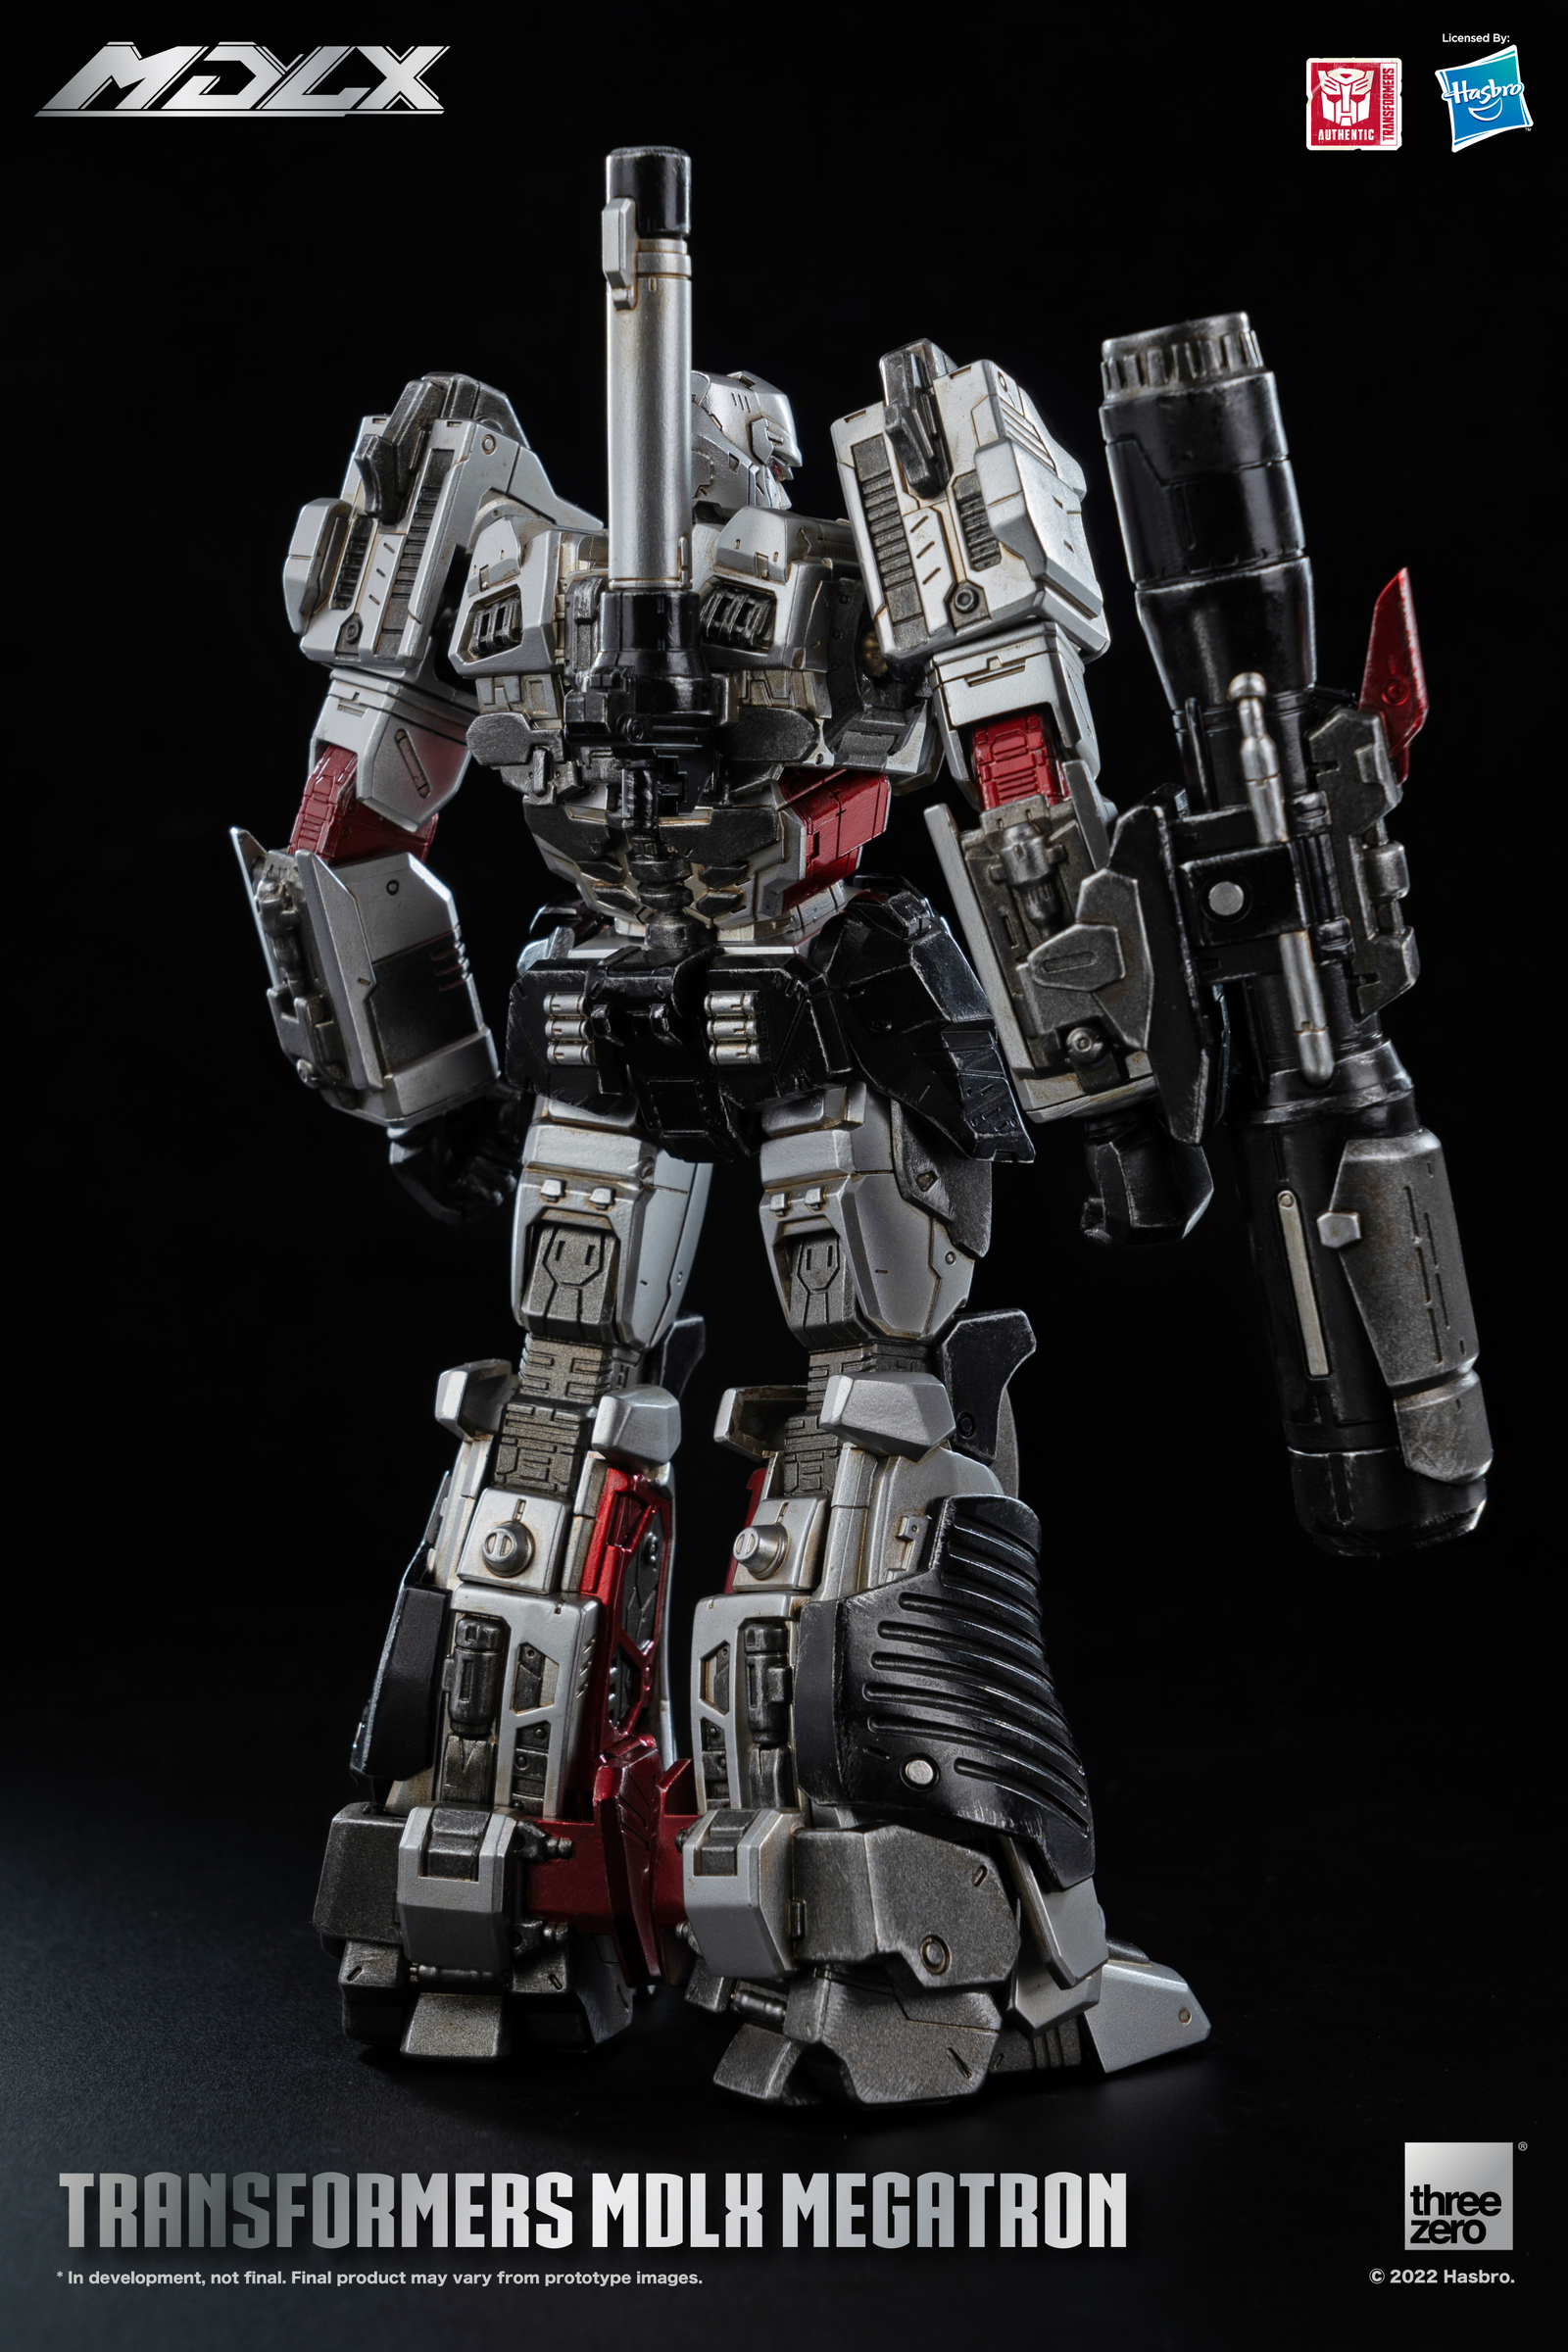  Transformers MDLX Megatron (6)